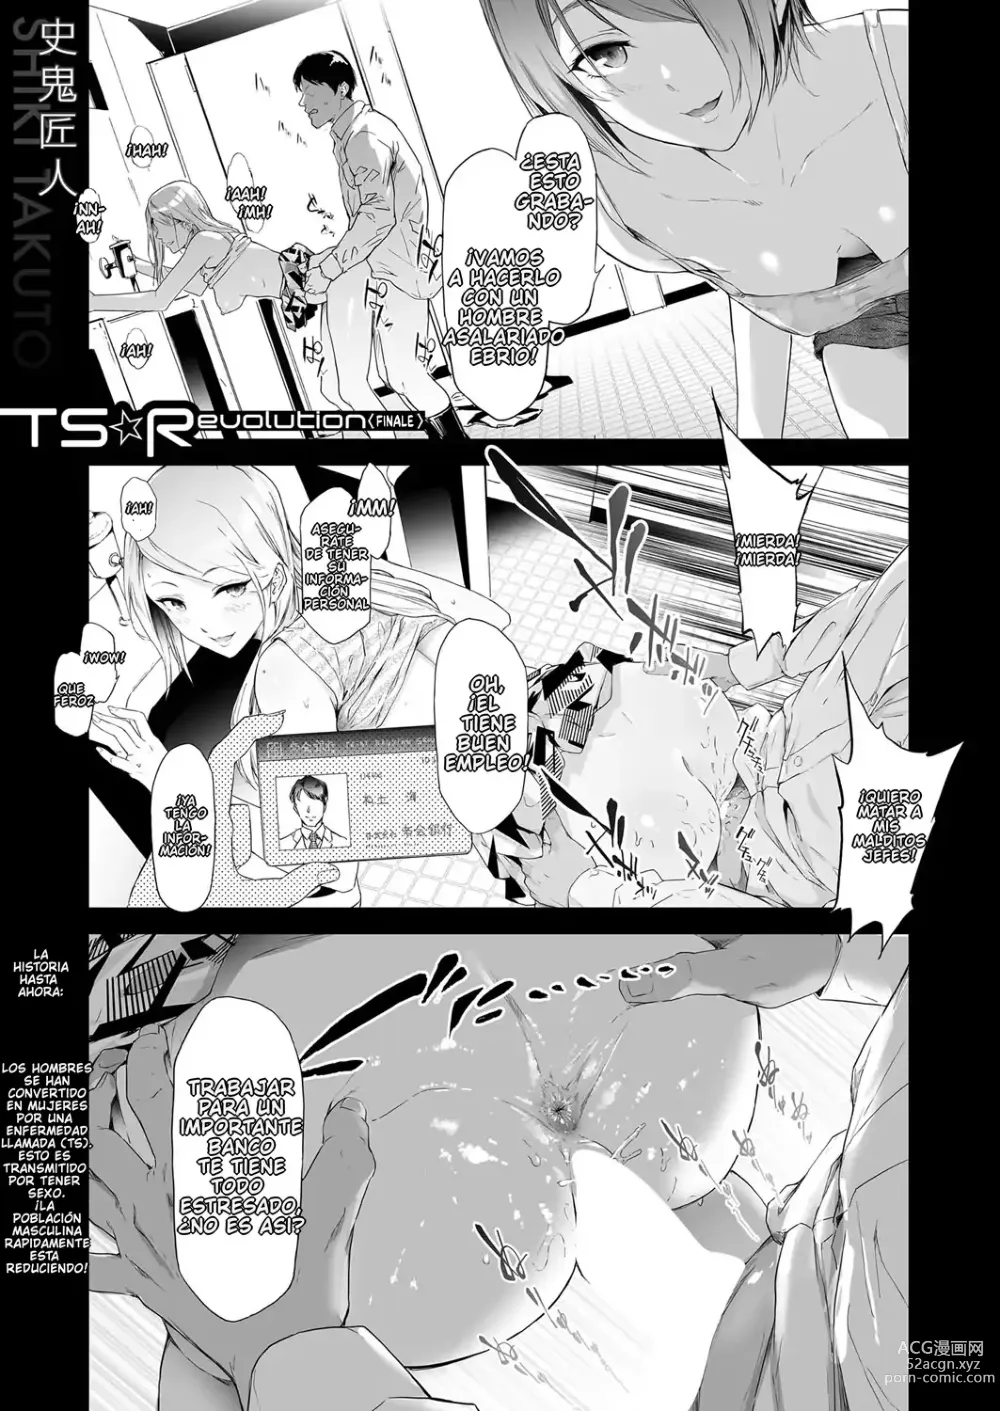 Page 1 of manga TS Revolution <Saishuuwa>